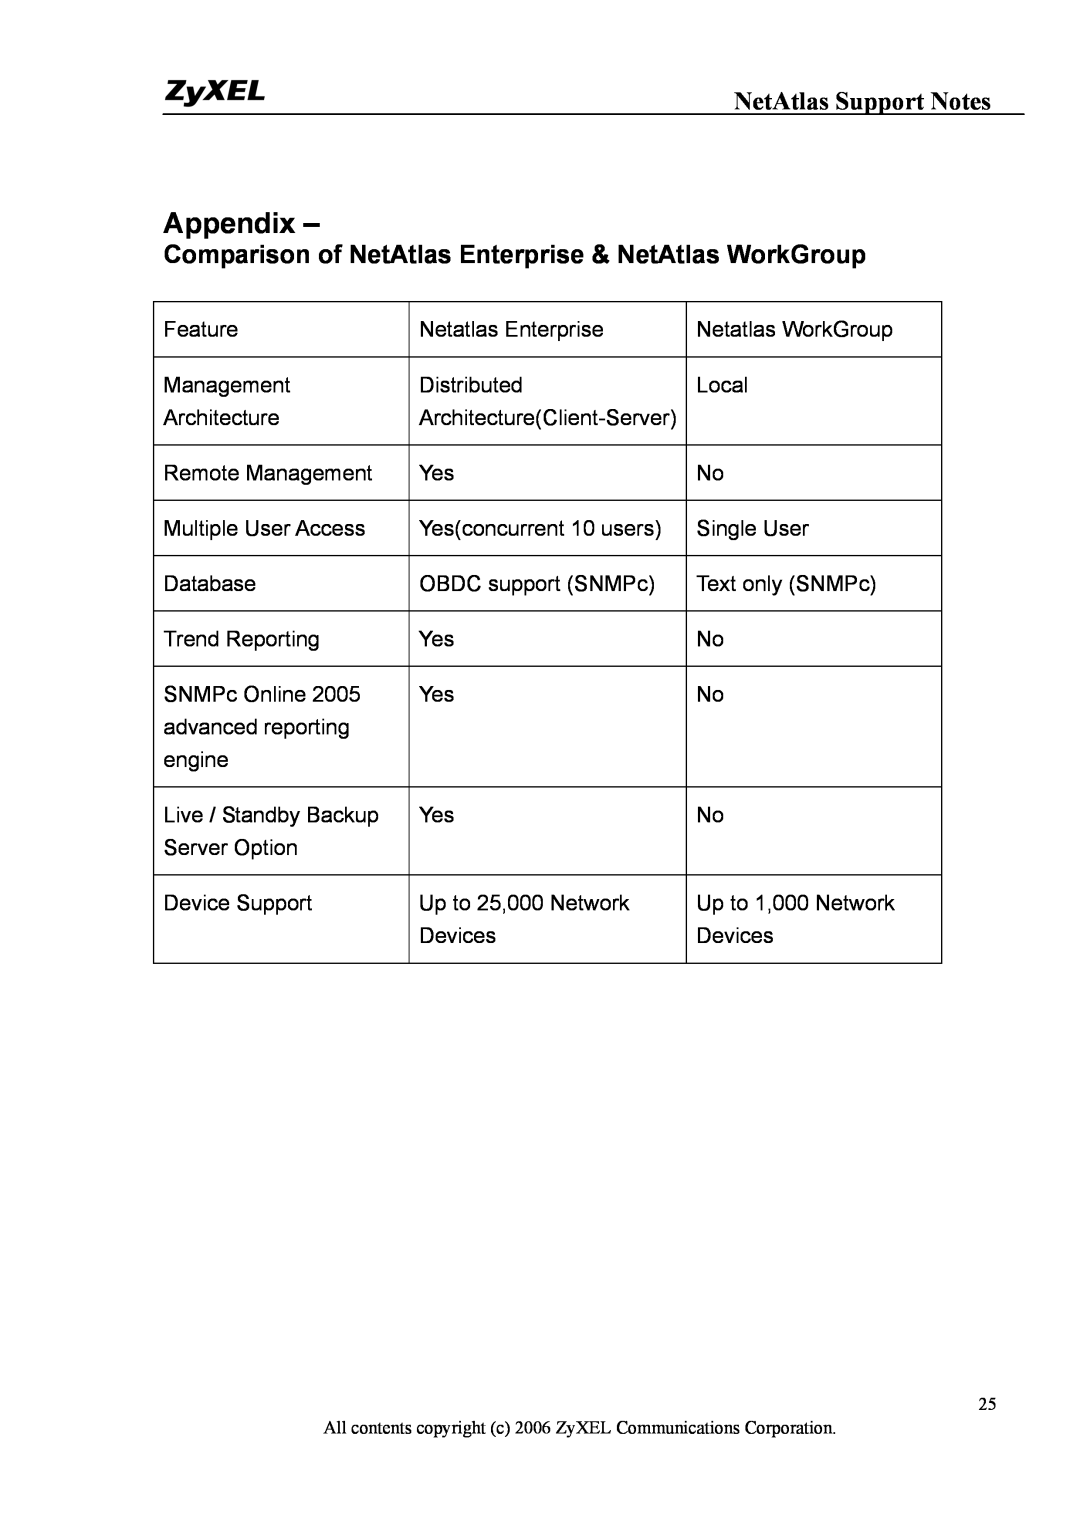 ZyXEL Communications 1 manual Appendix, Comparison of NetAtlas Enterprise & NetAtlas WorkGroup, NetAtlas Support Notes 